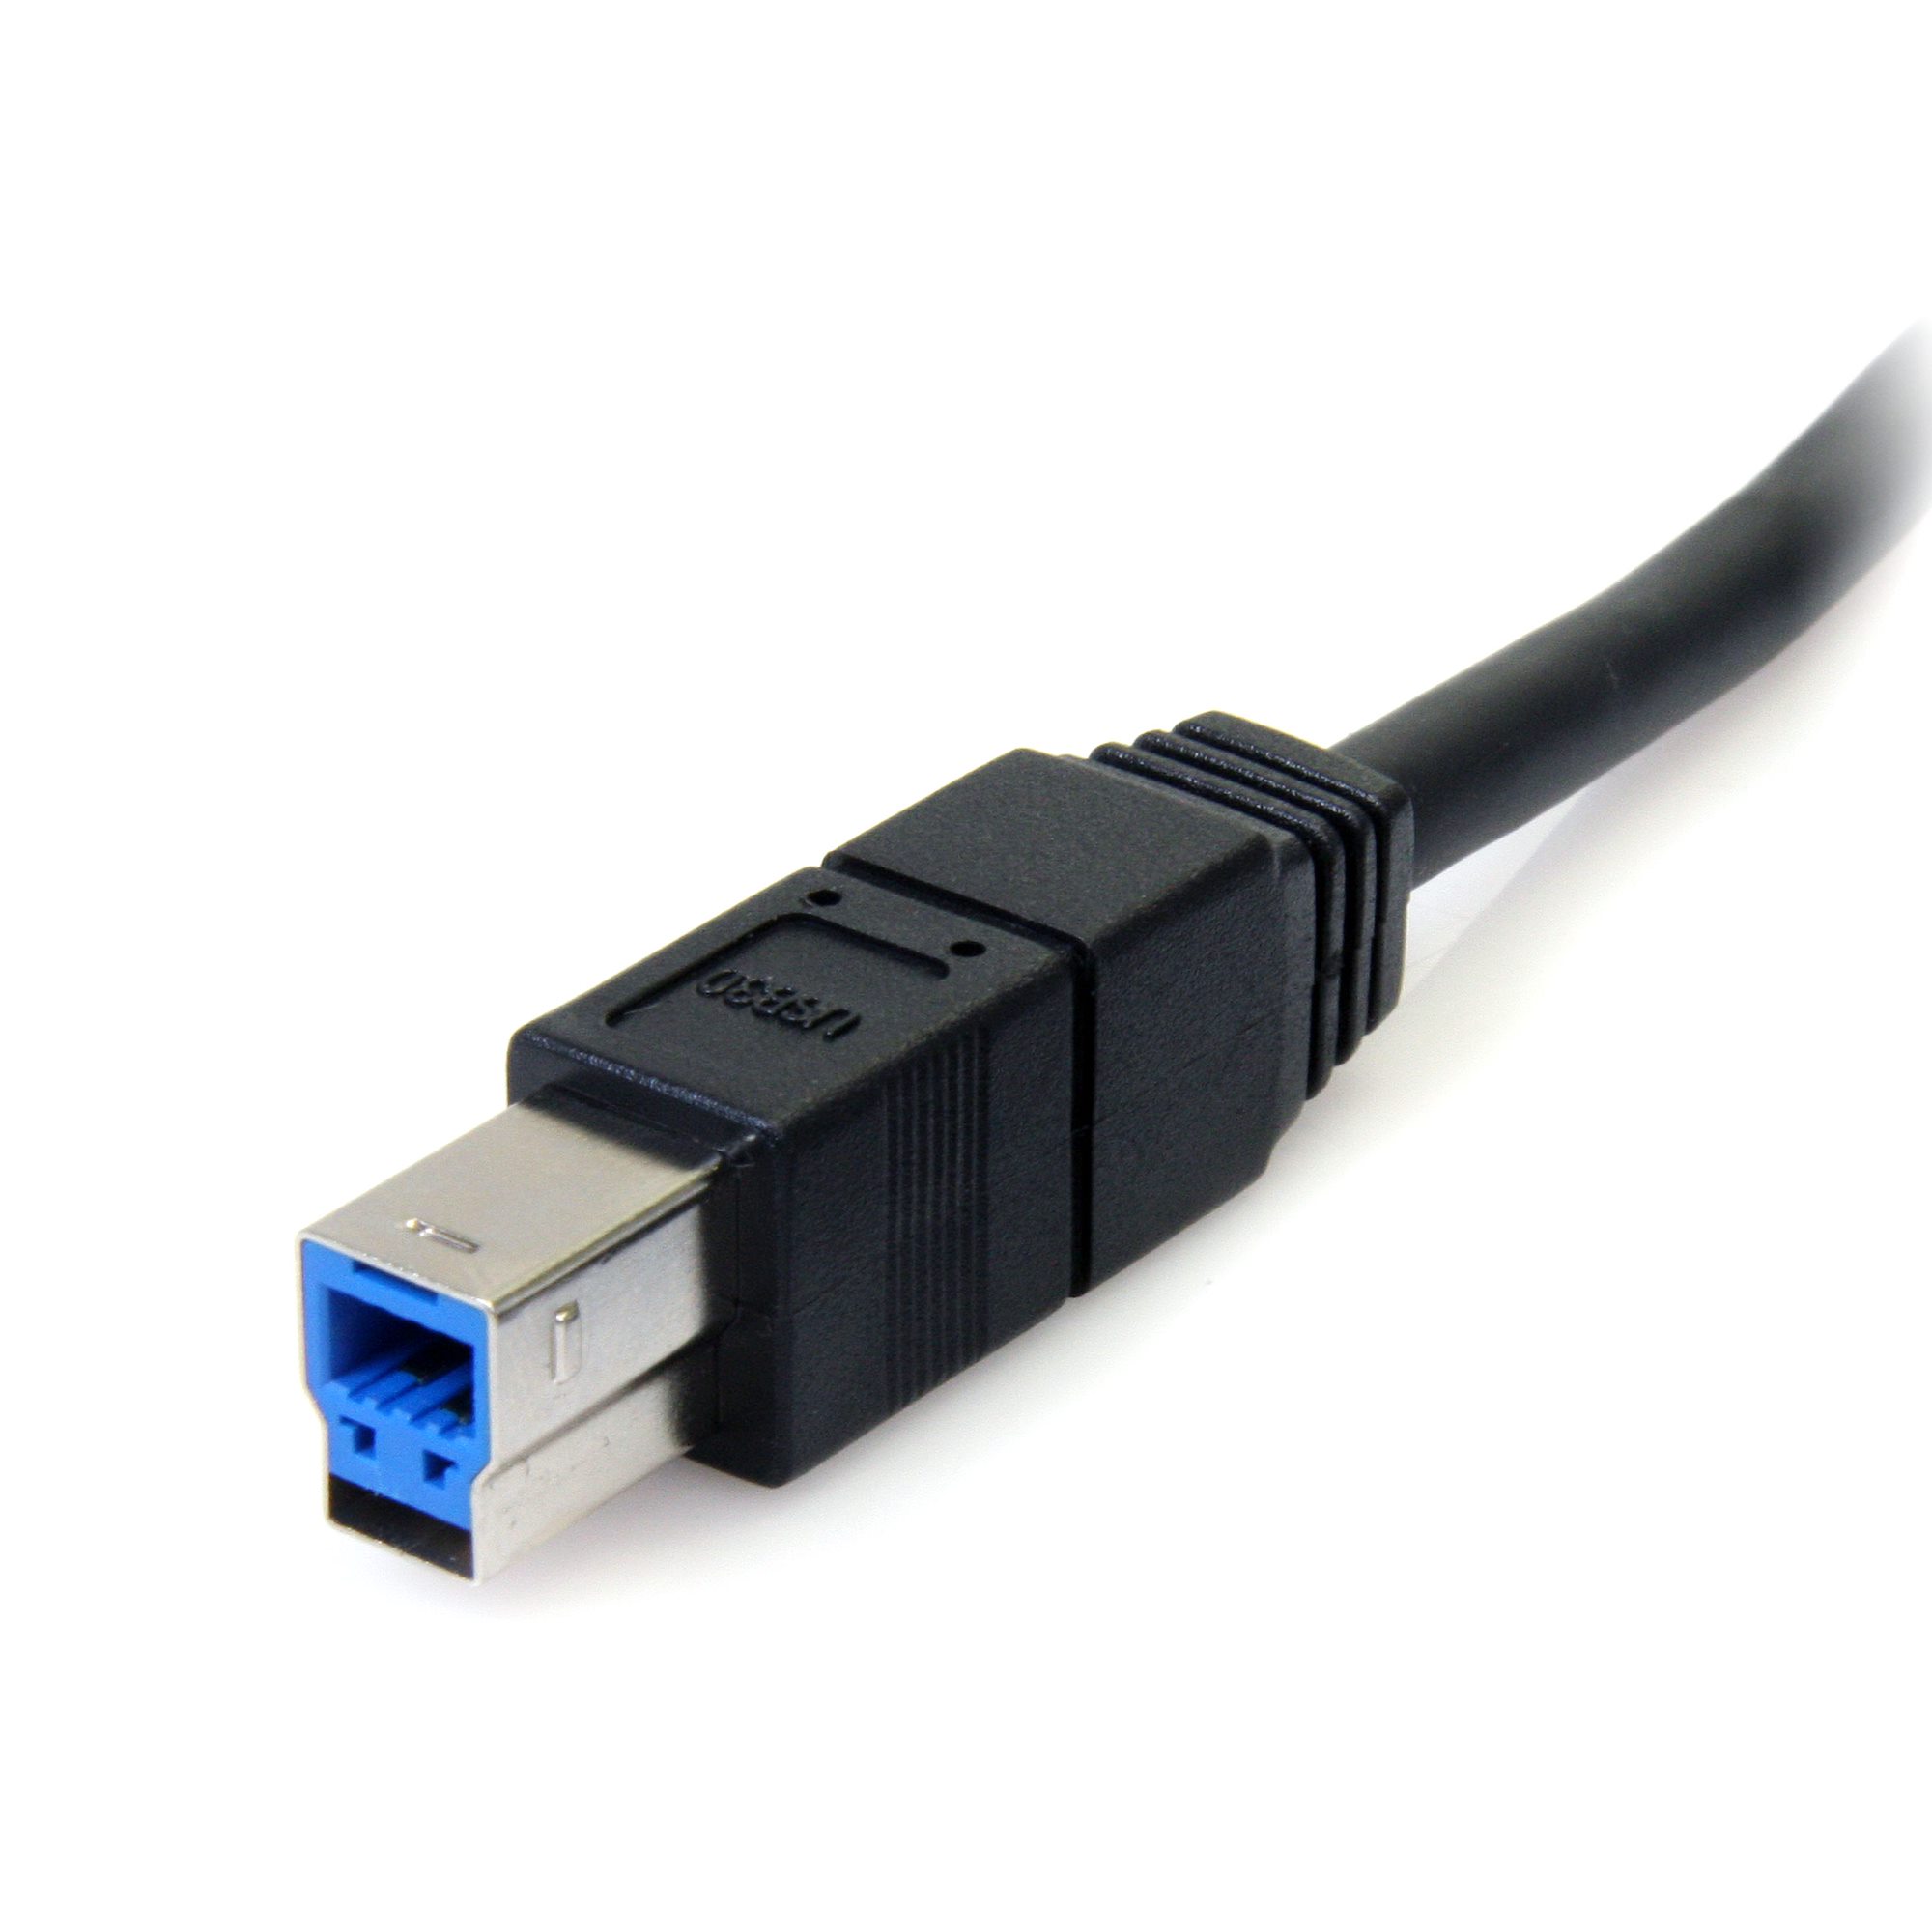 Vivanco Alargo USB (Longitud del cable: 3 m, Negro)